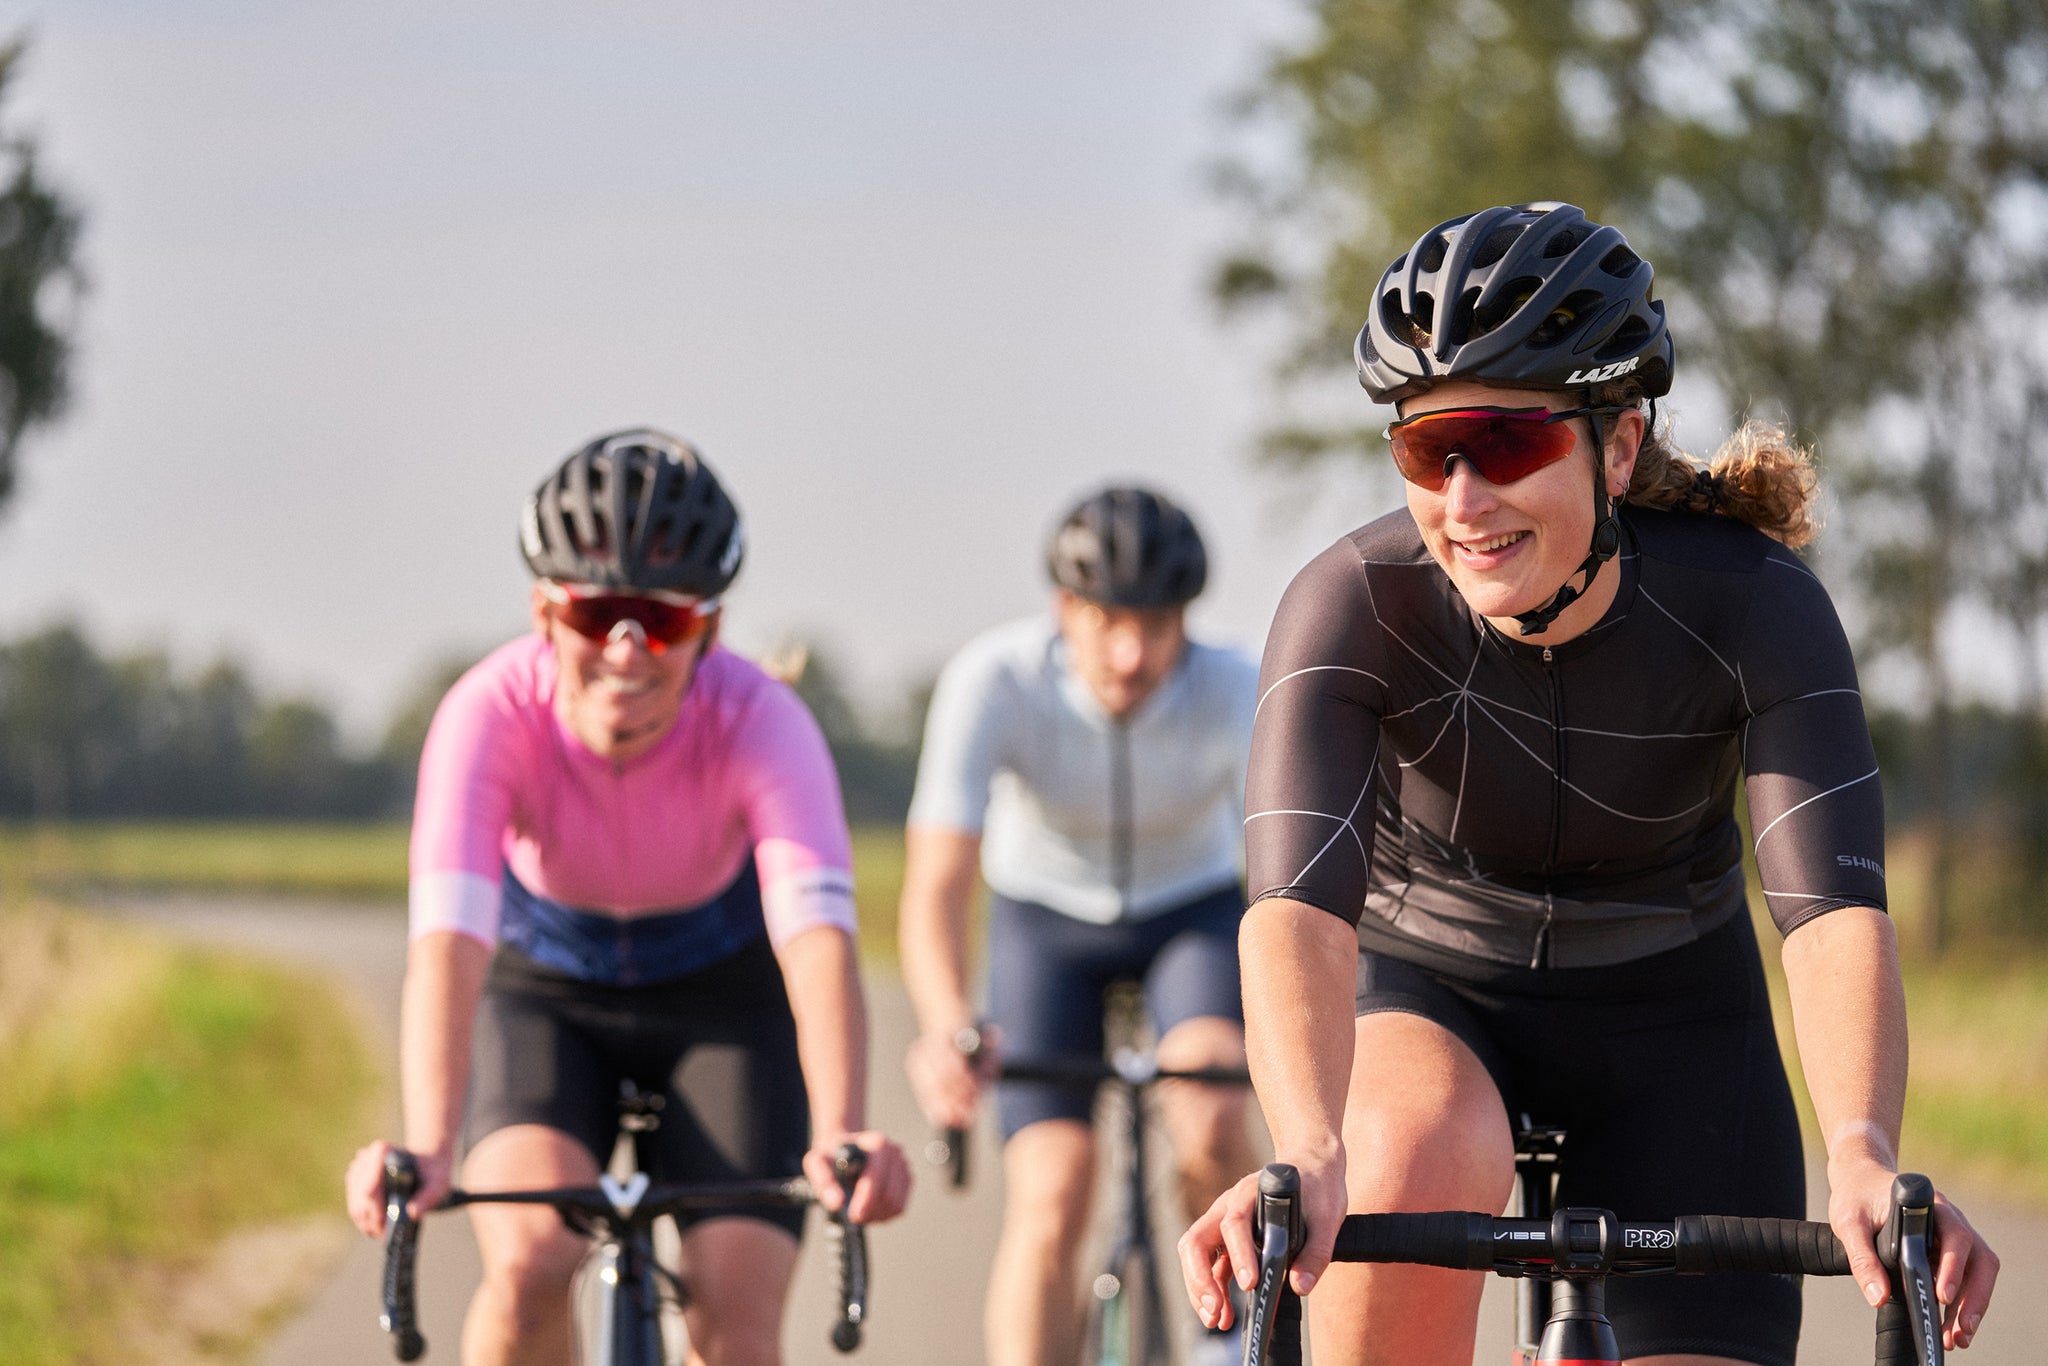 Group of women riding road bikes wearing Lazer helmets